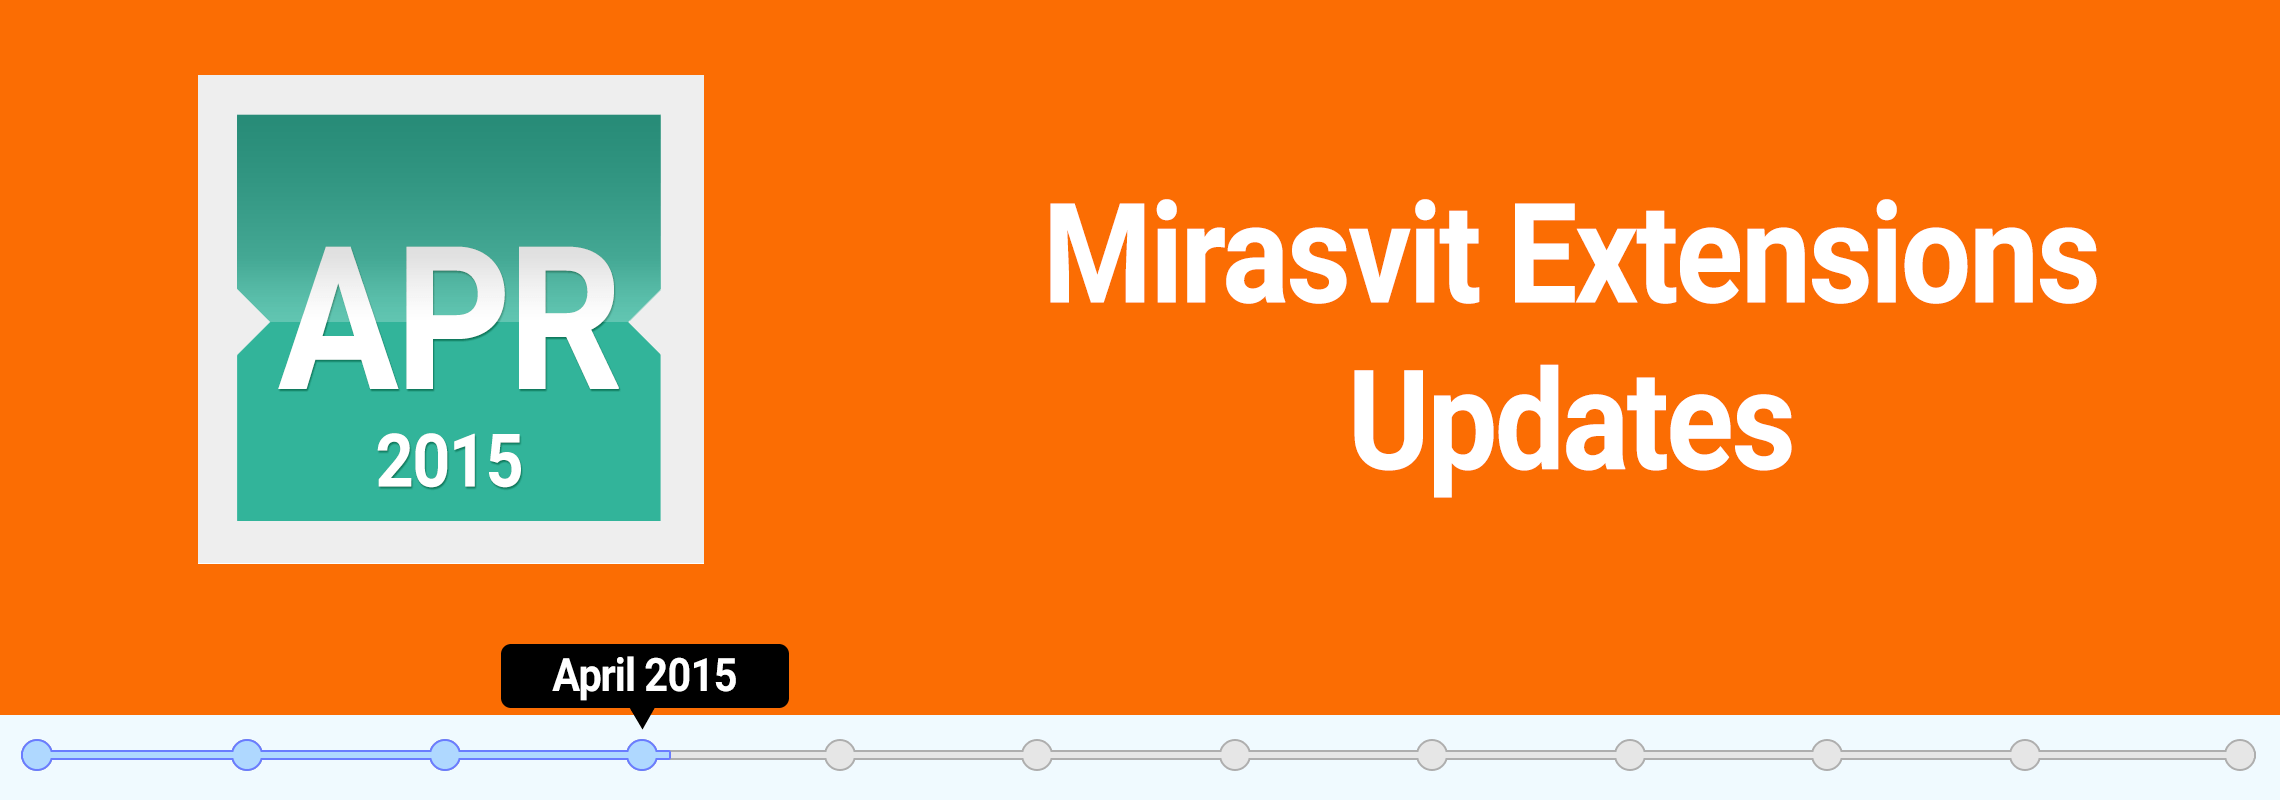 Mirasvit Extensions Updates: April 2015